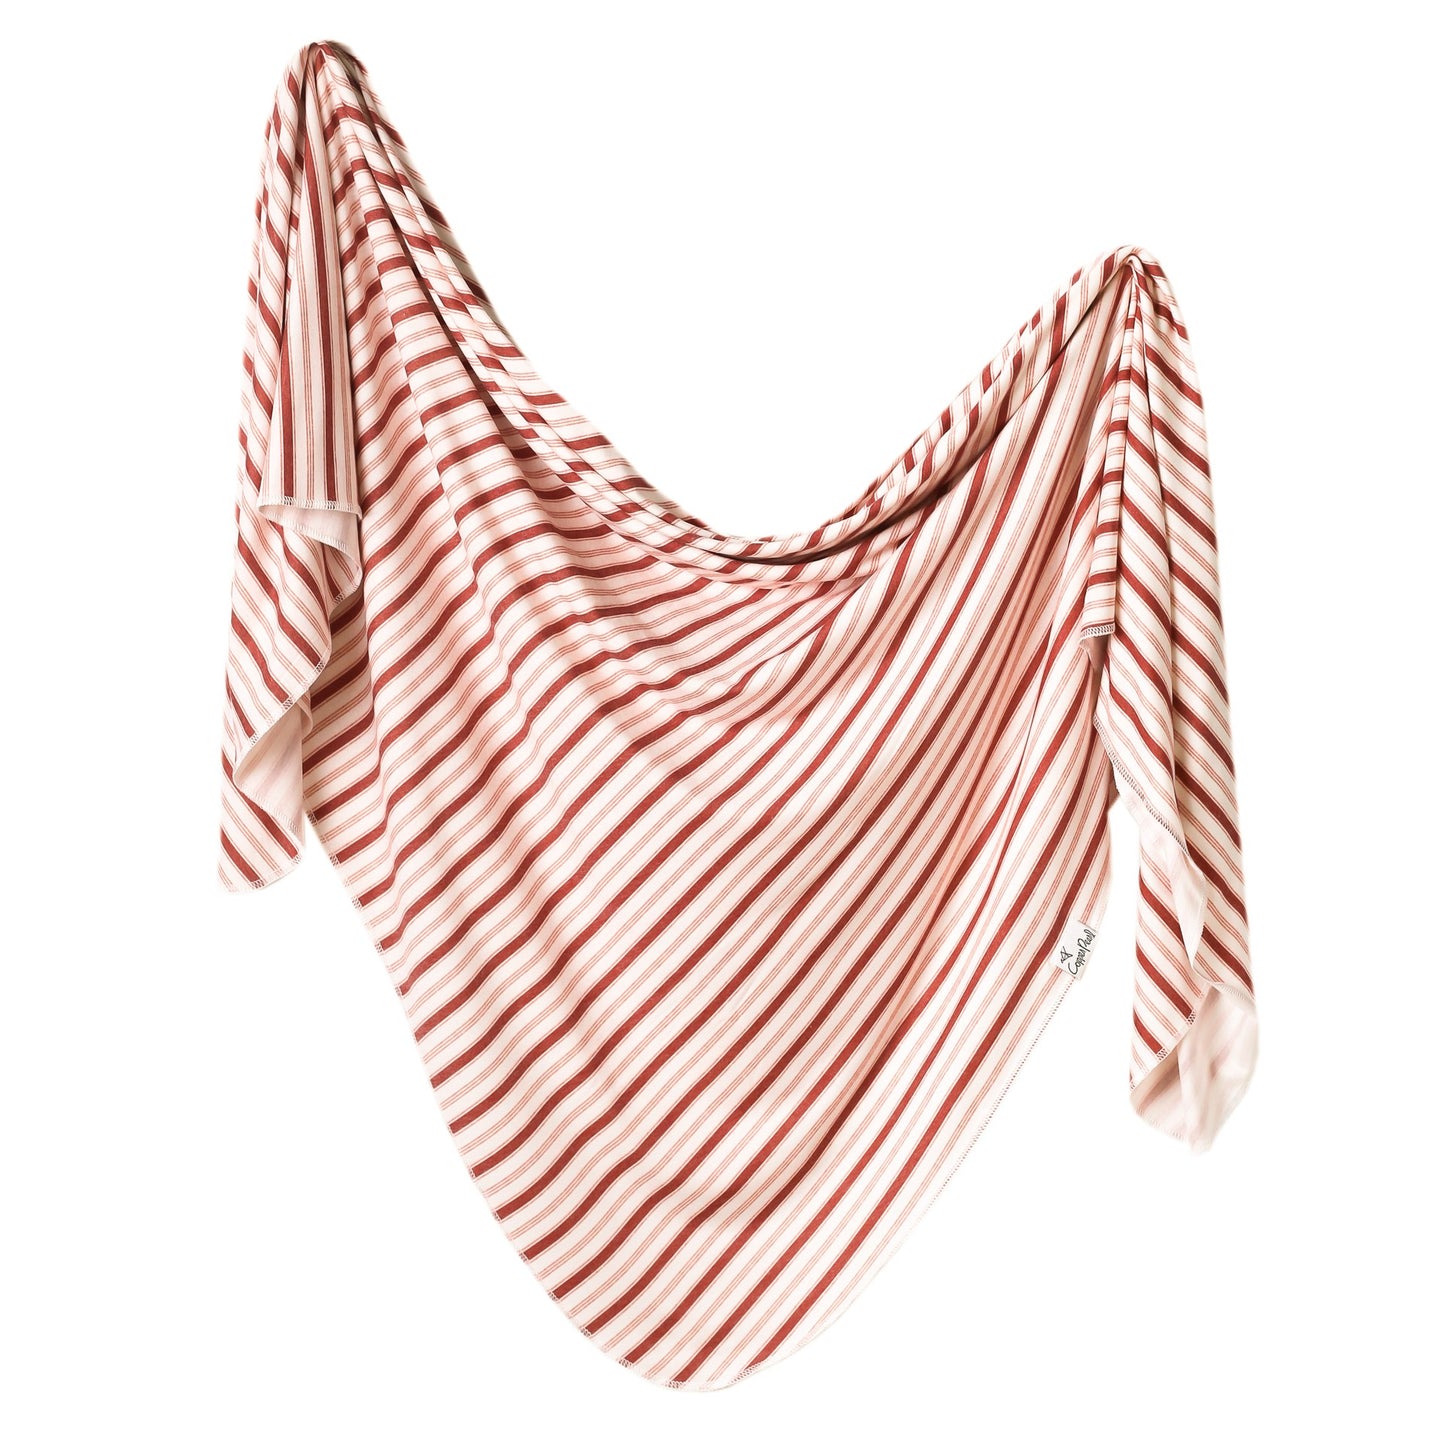 Copper Pearl Knit Swaddle Blanket - Cinnamon